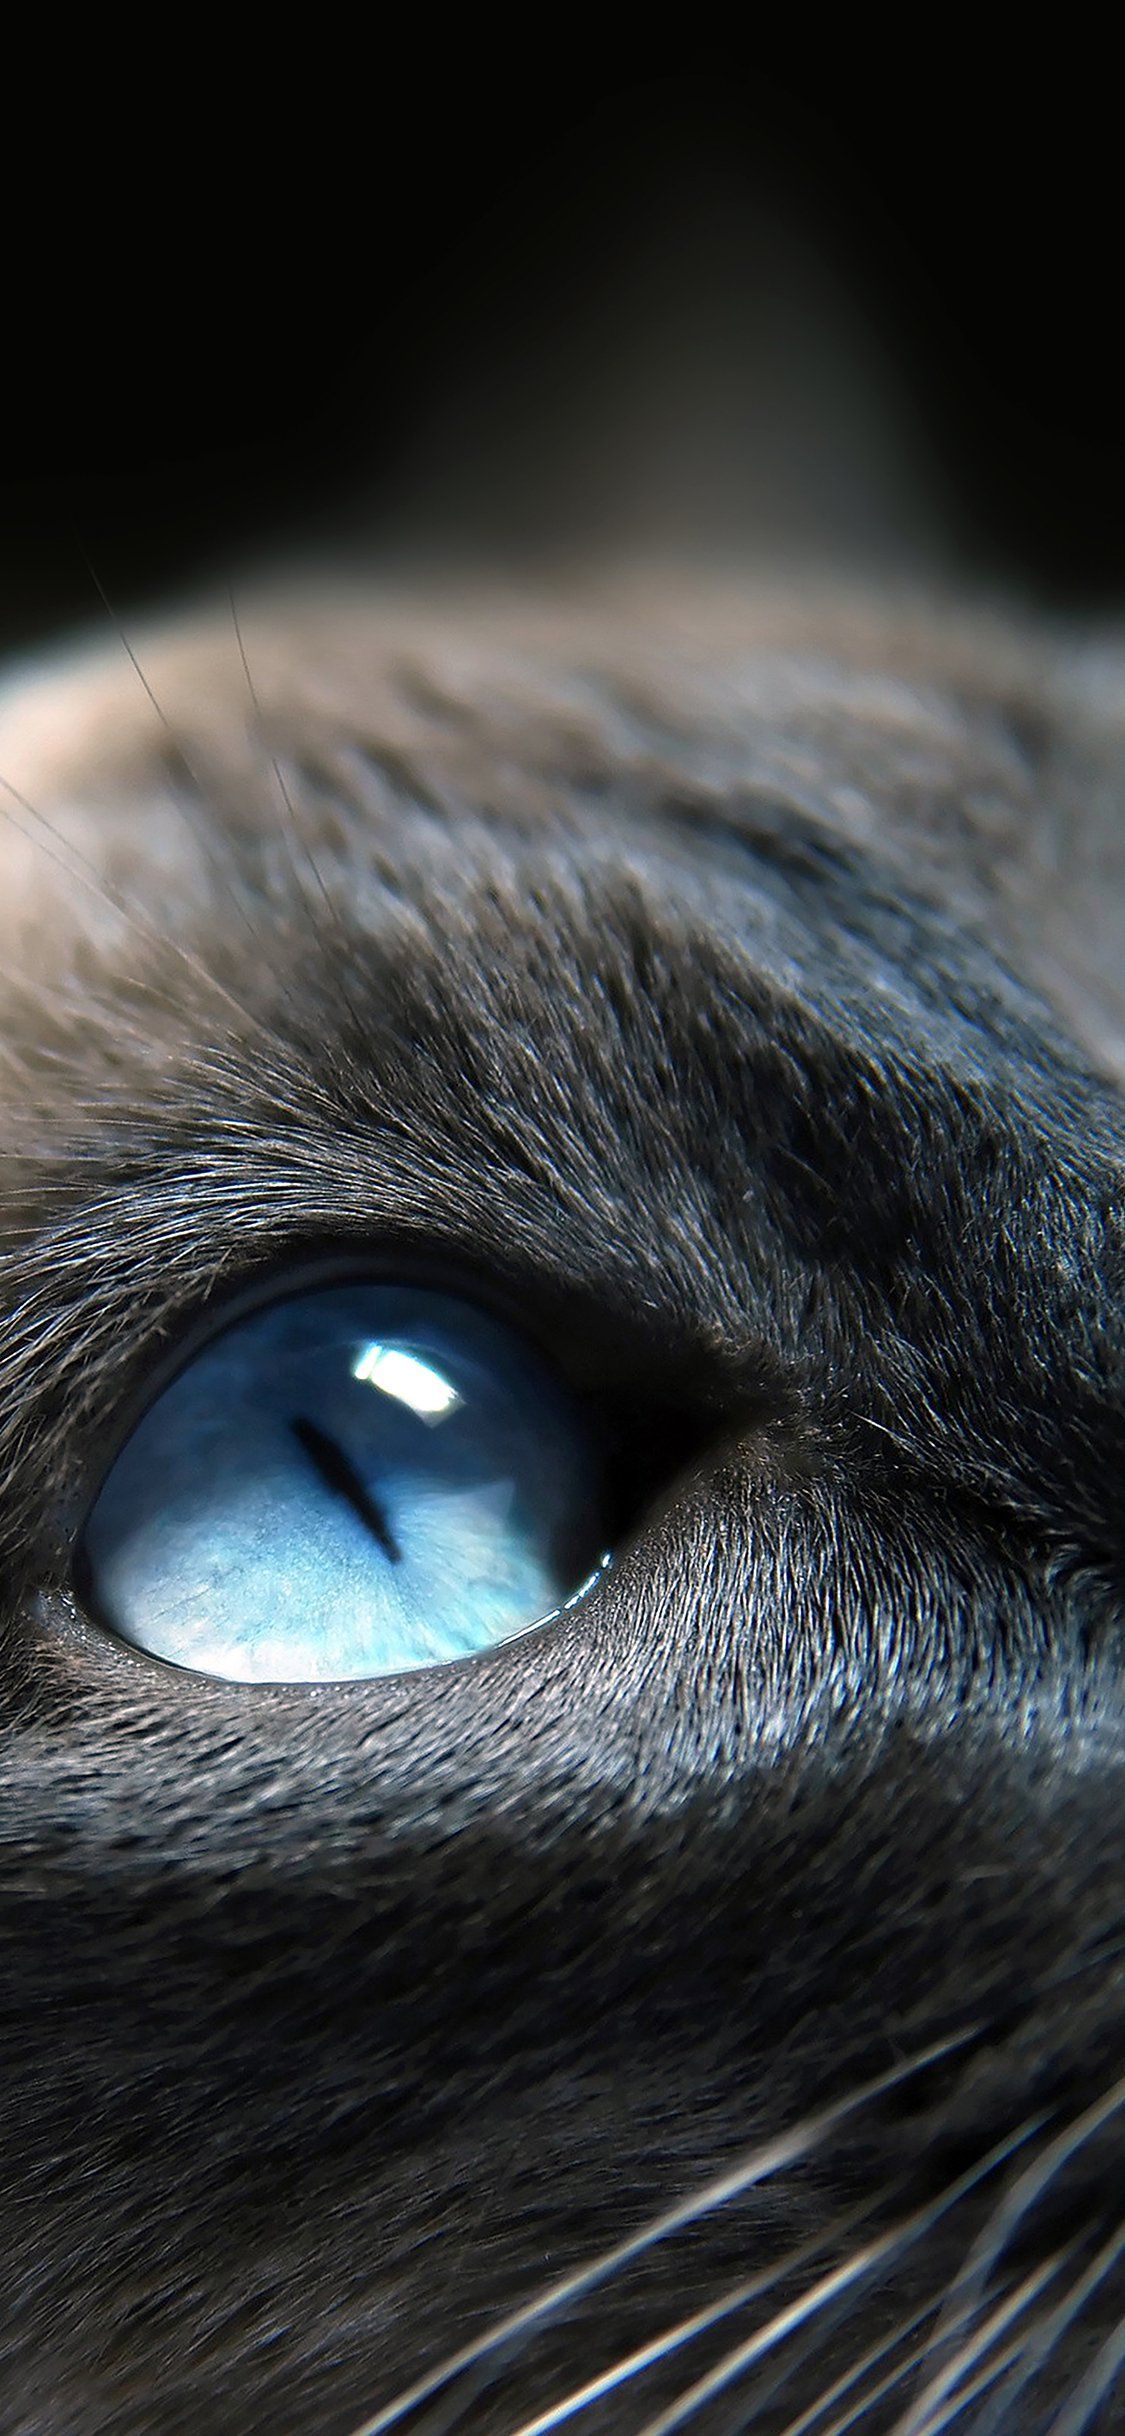 Cats blue eye cute iPhone X Wallpaper Free Download